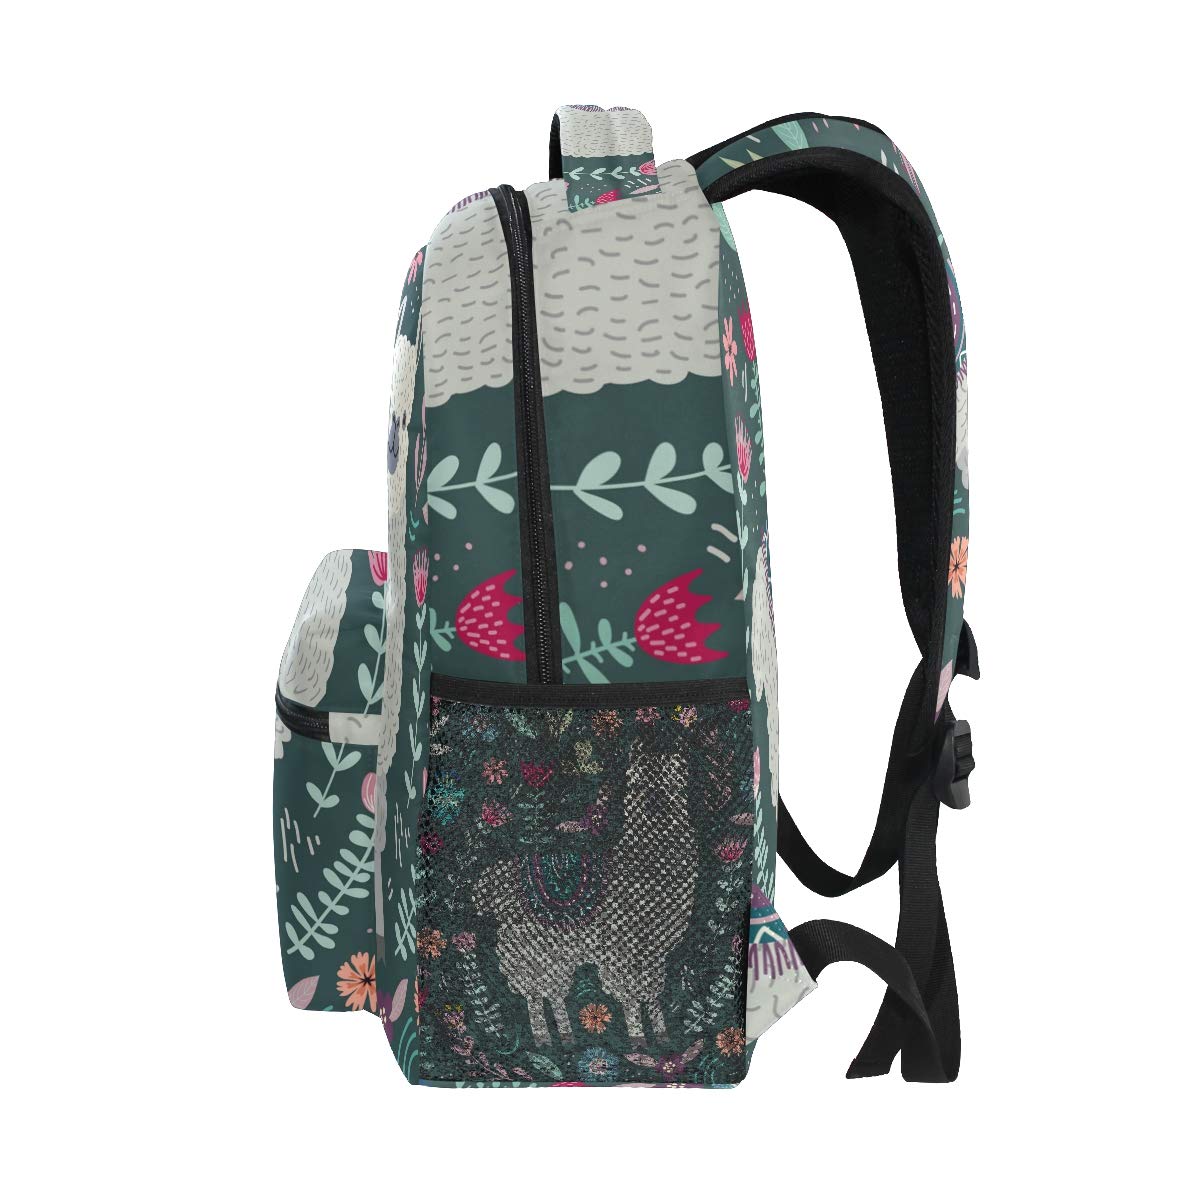 School Backpack Llama Teens Girls Boys Schoolbag Travel Bag